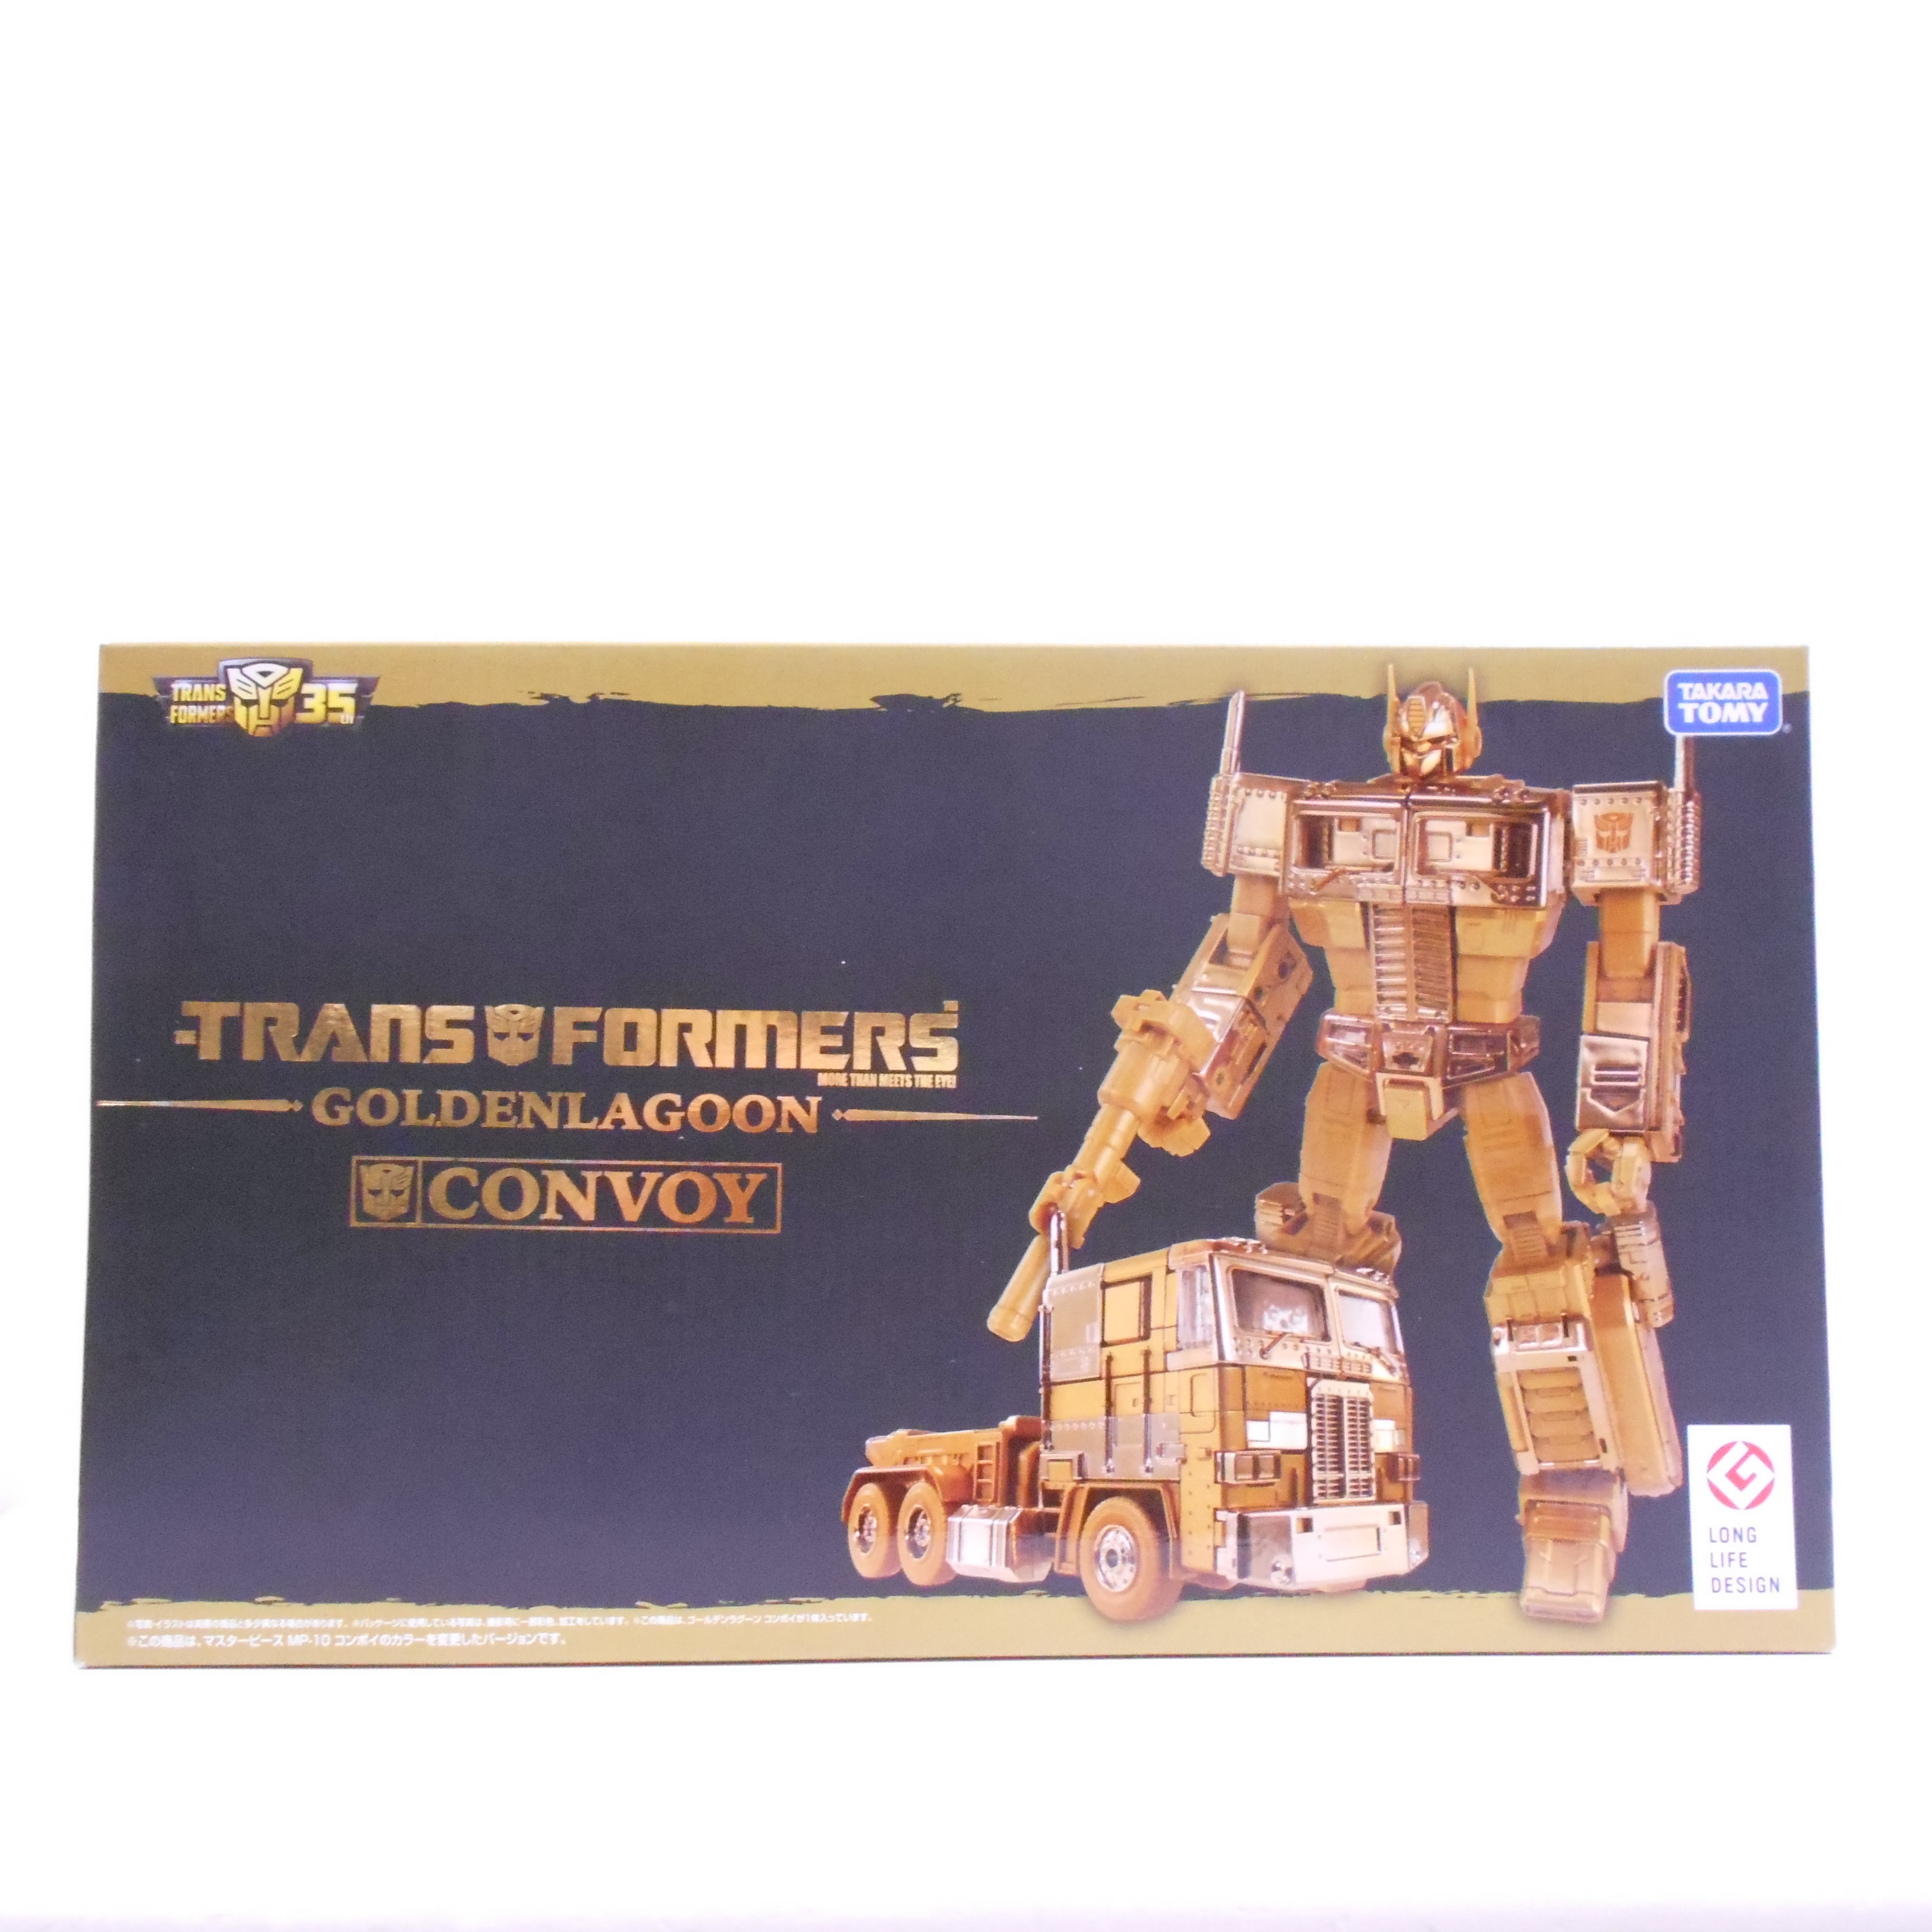 Transformers Golden Lagoon Convoy